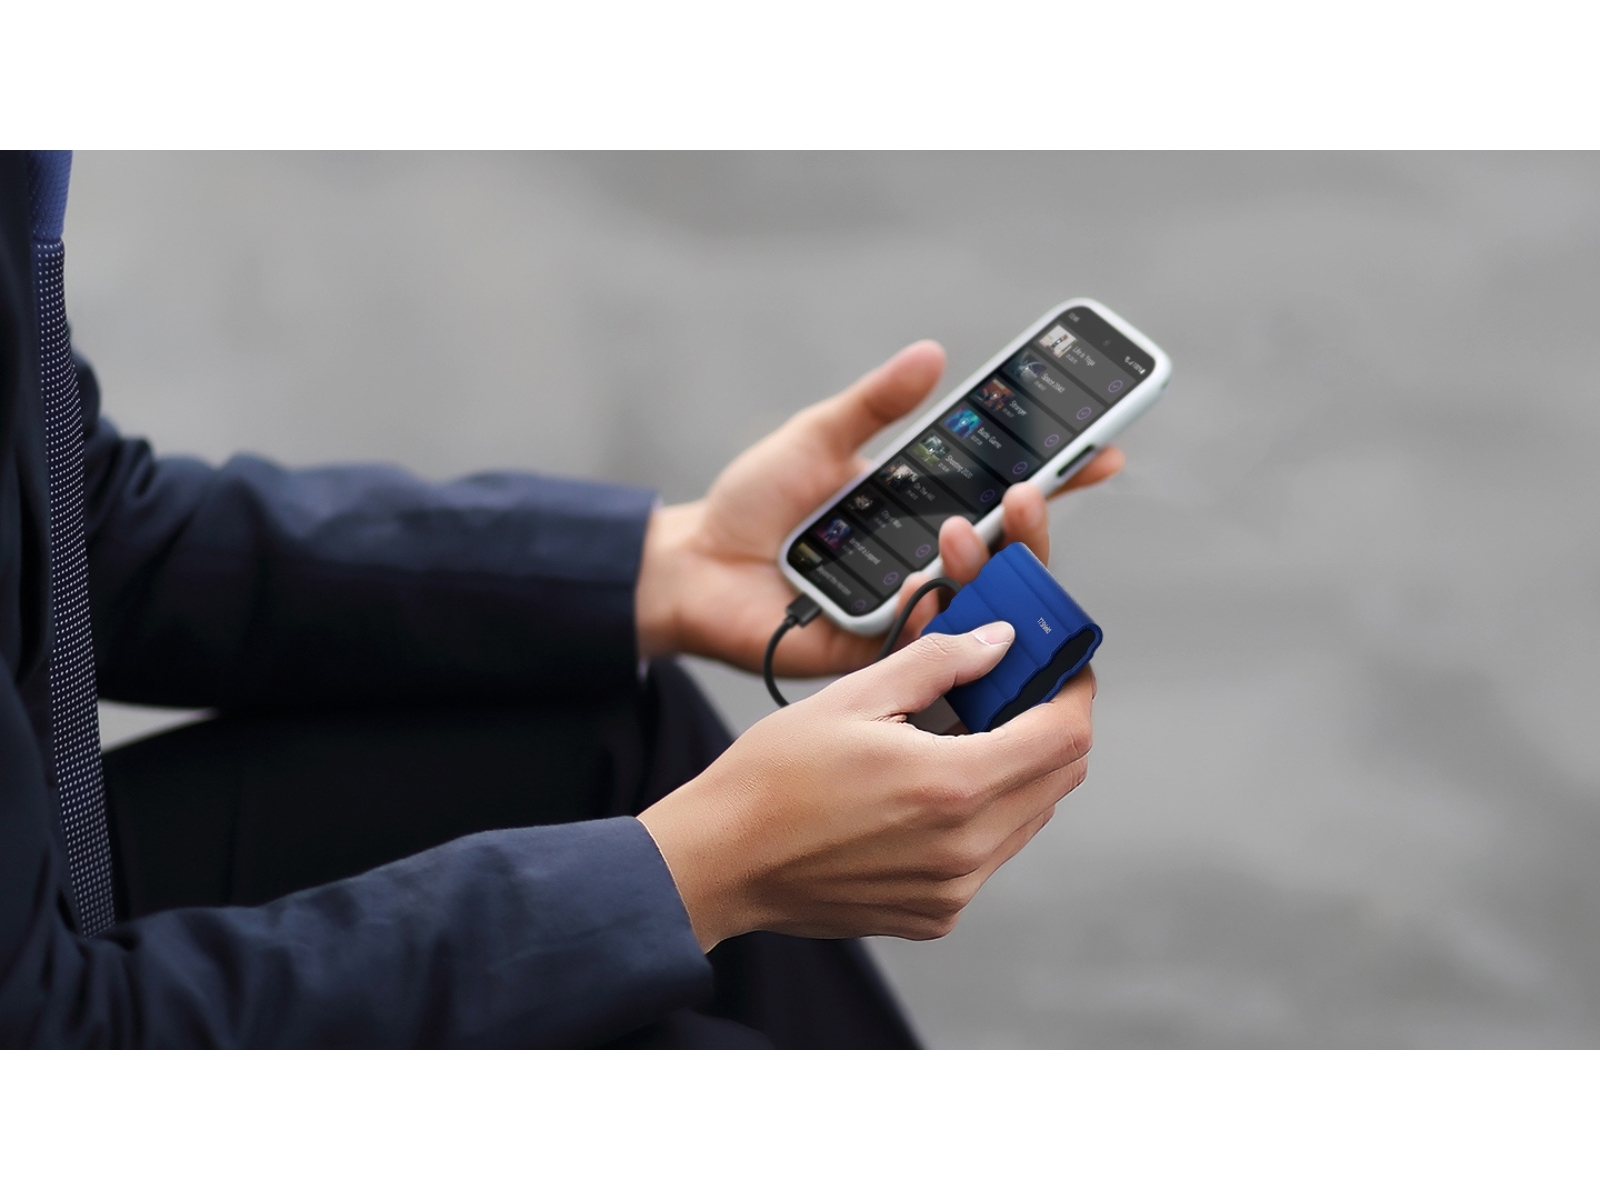 Samsung T5 EVO 4 TB Portable Solid State Drive - External - Black (MU- –  Network Hardwares